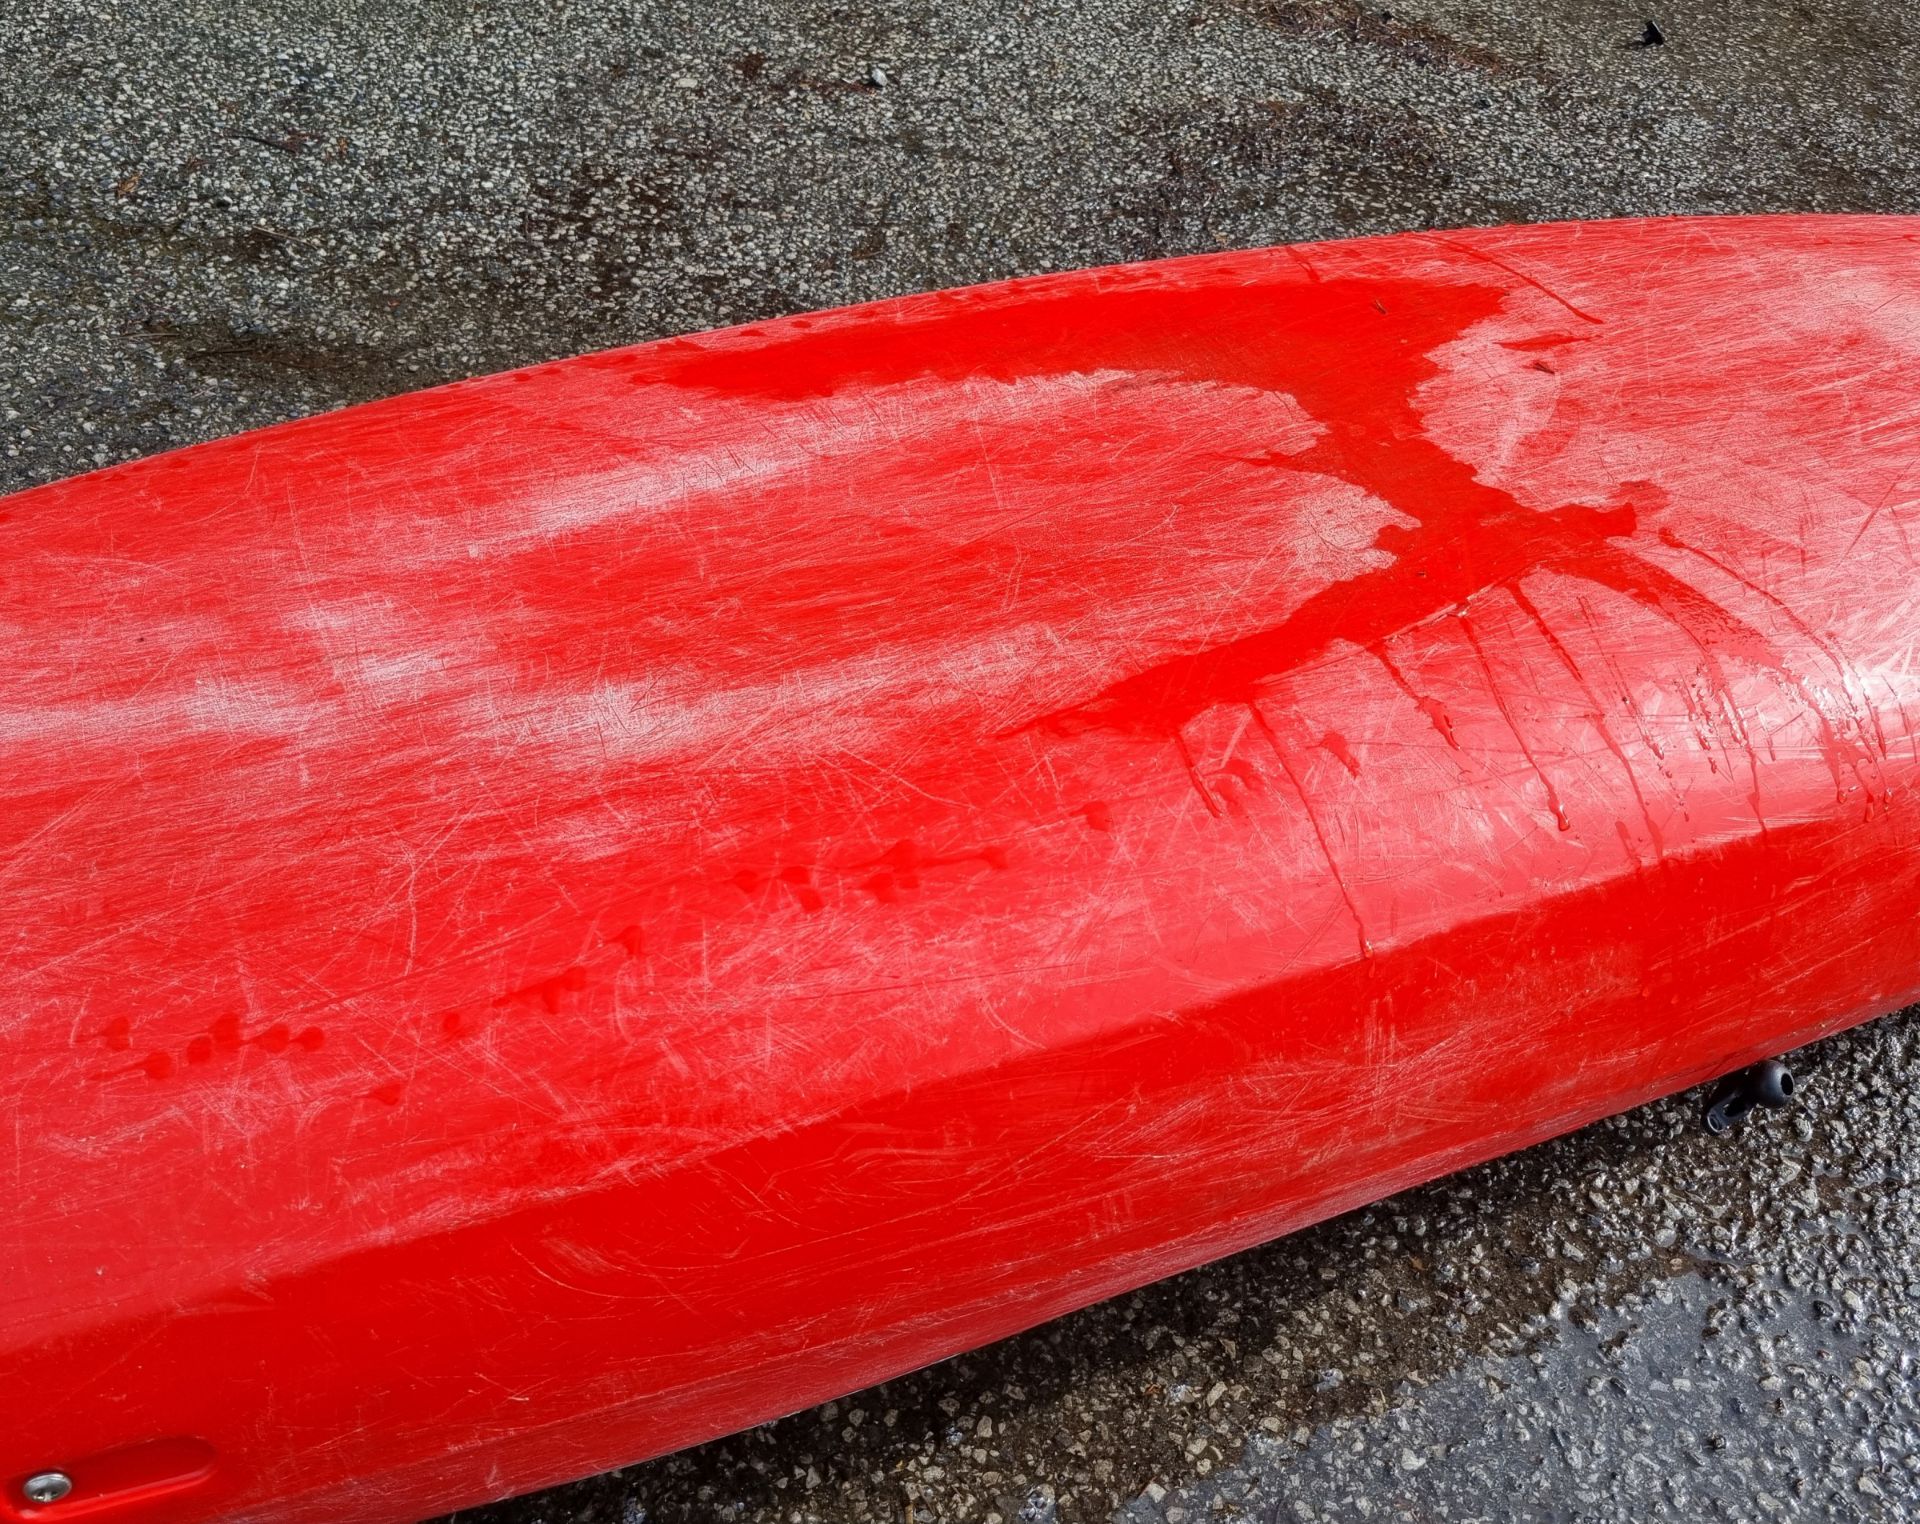 Dagger Katana polyethylene kayak - red - W 3200 x D 660 x H 420mm - Image 8 of 8